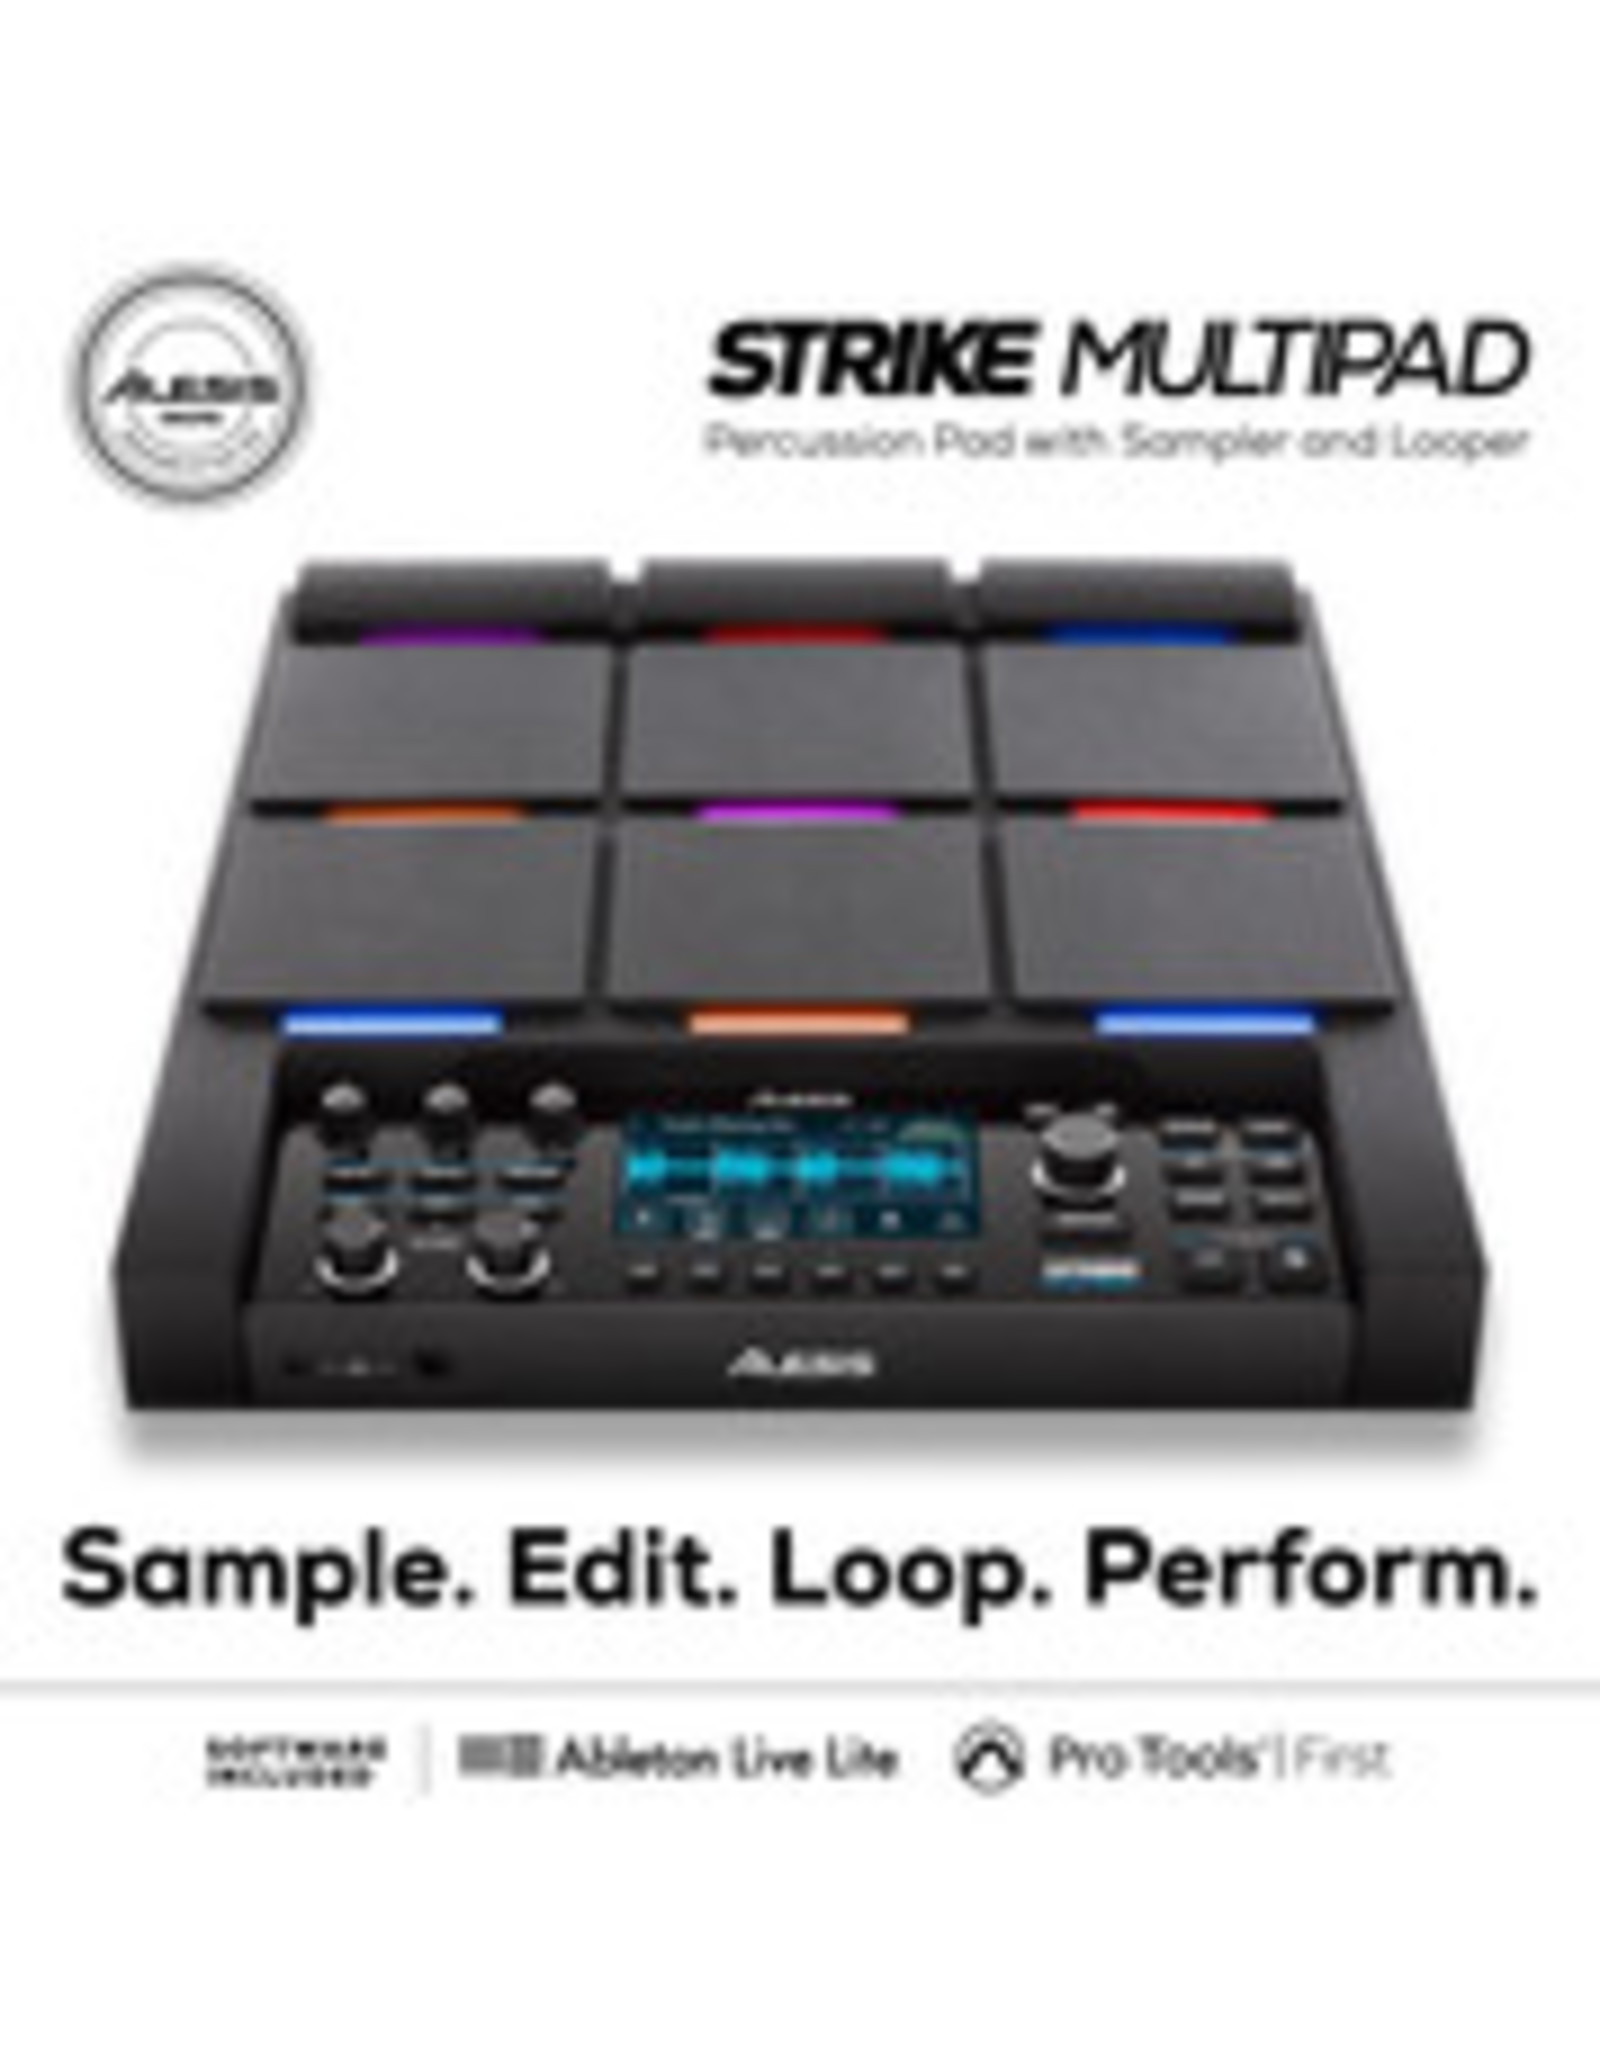 Alesis Strike Multipad Percussion pad with sampler and looper